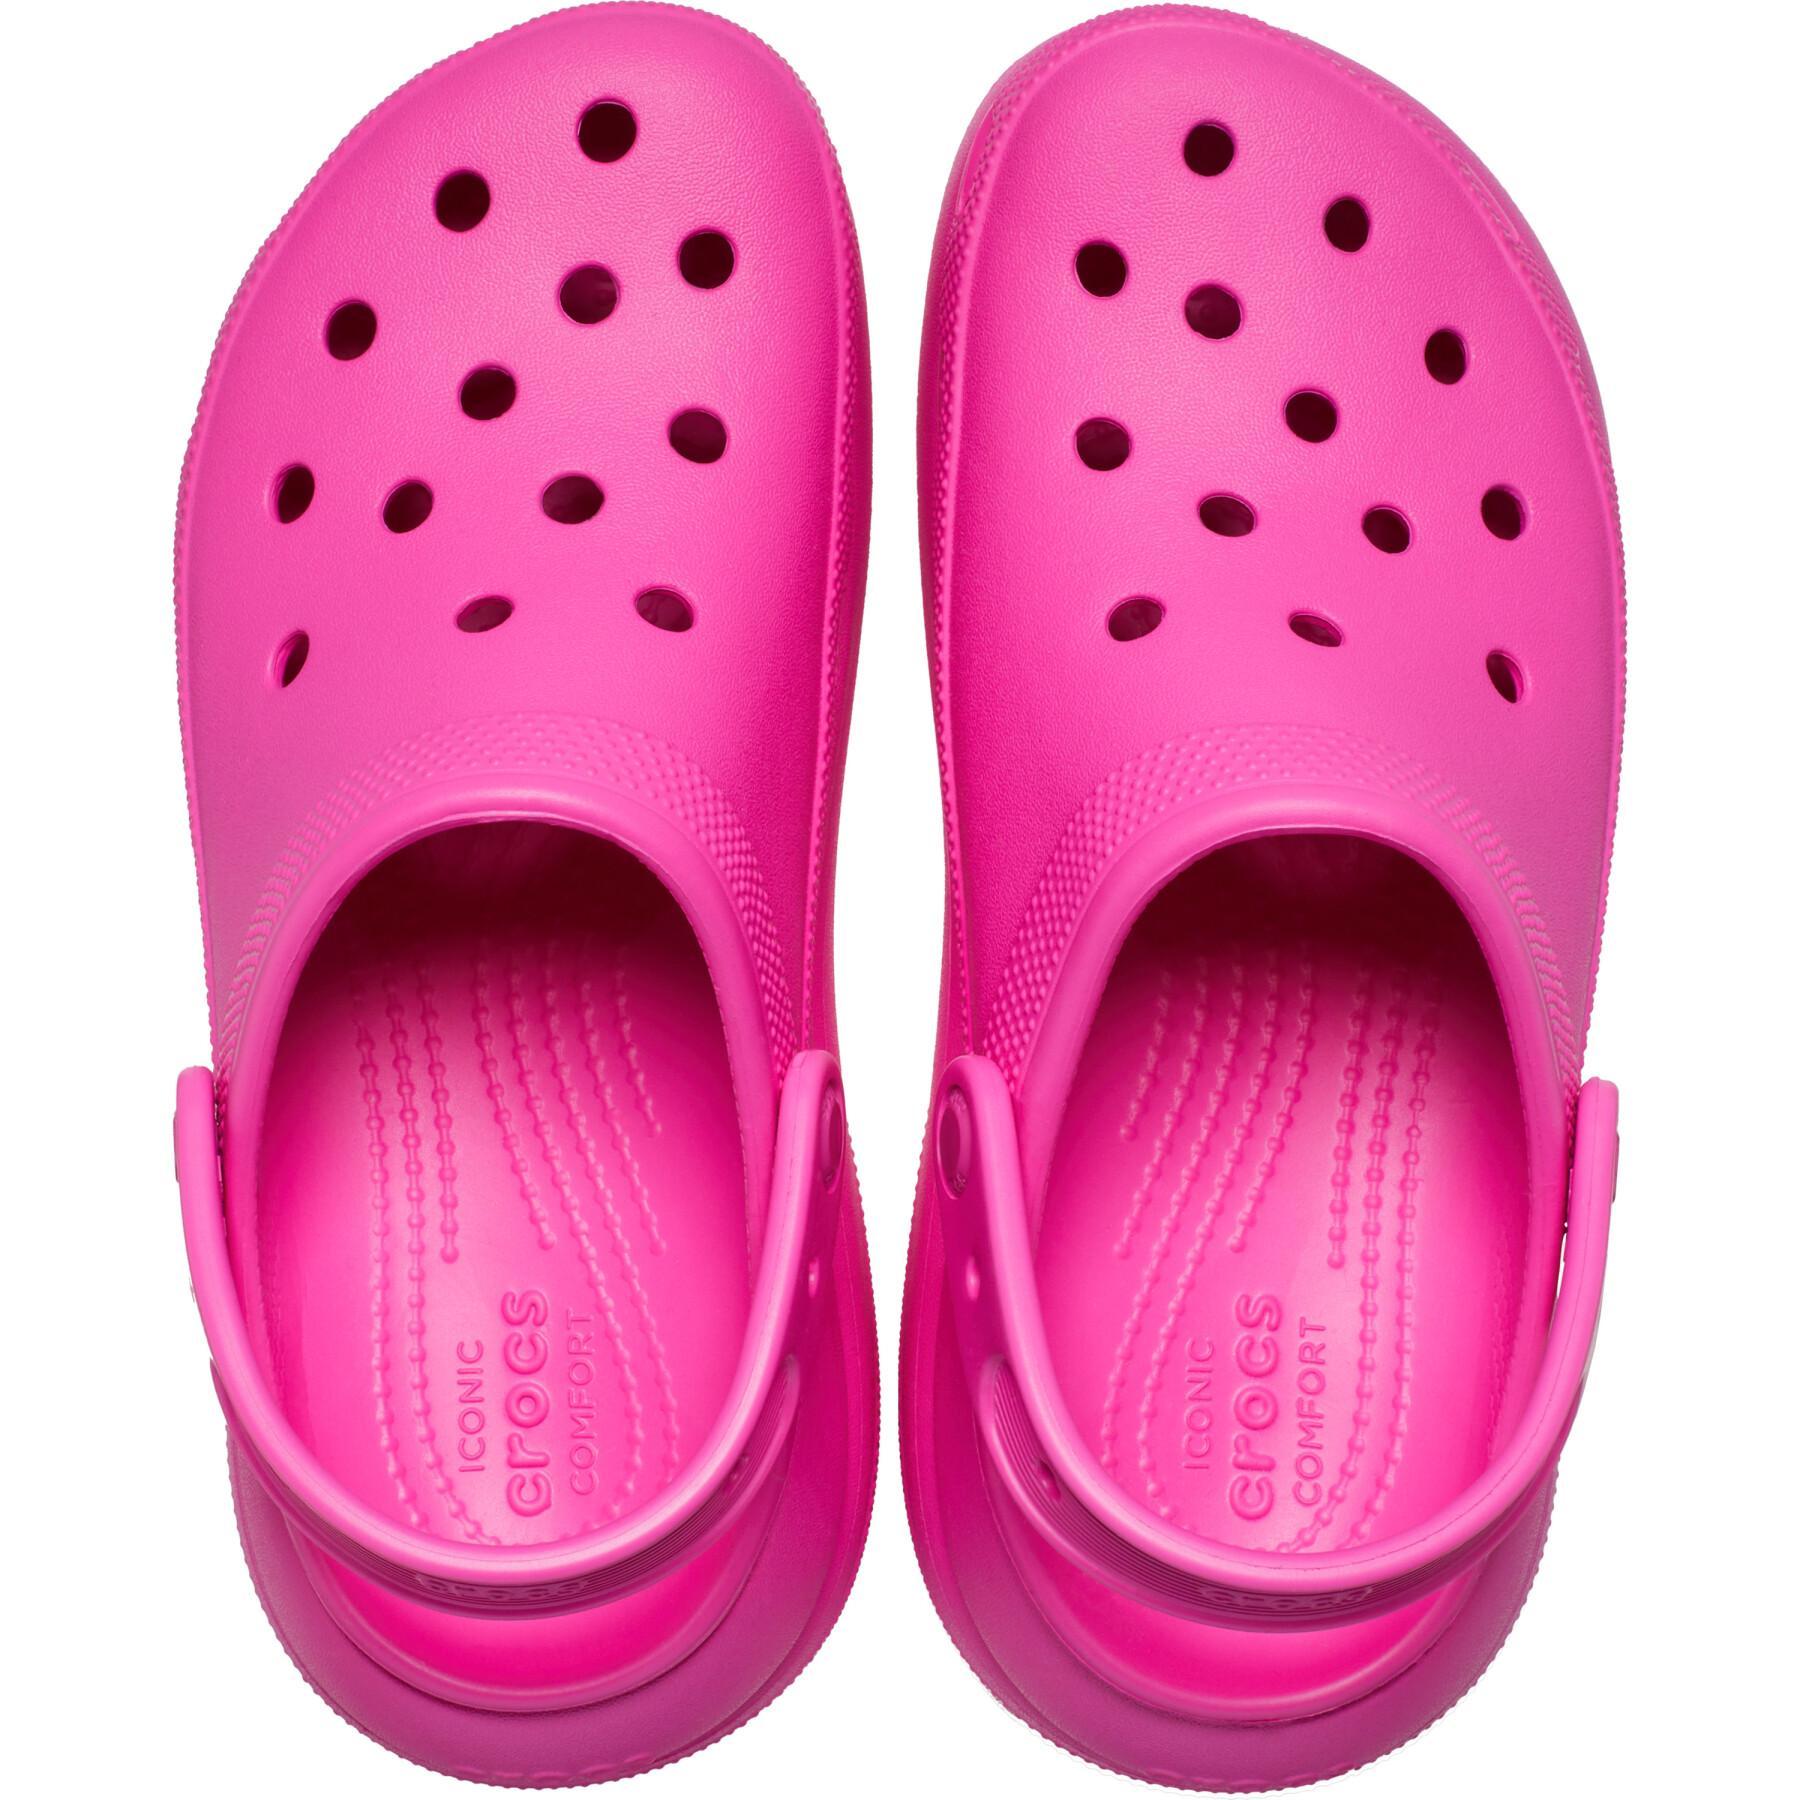 Children's clogs Crocs Crush